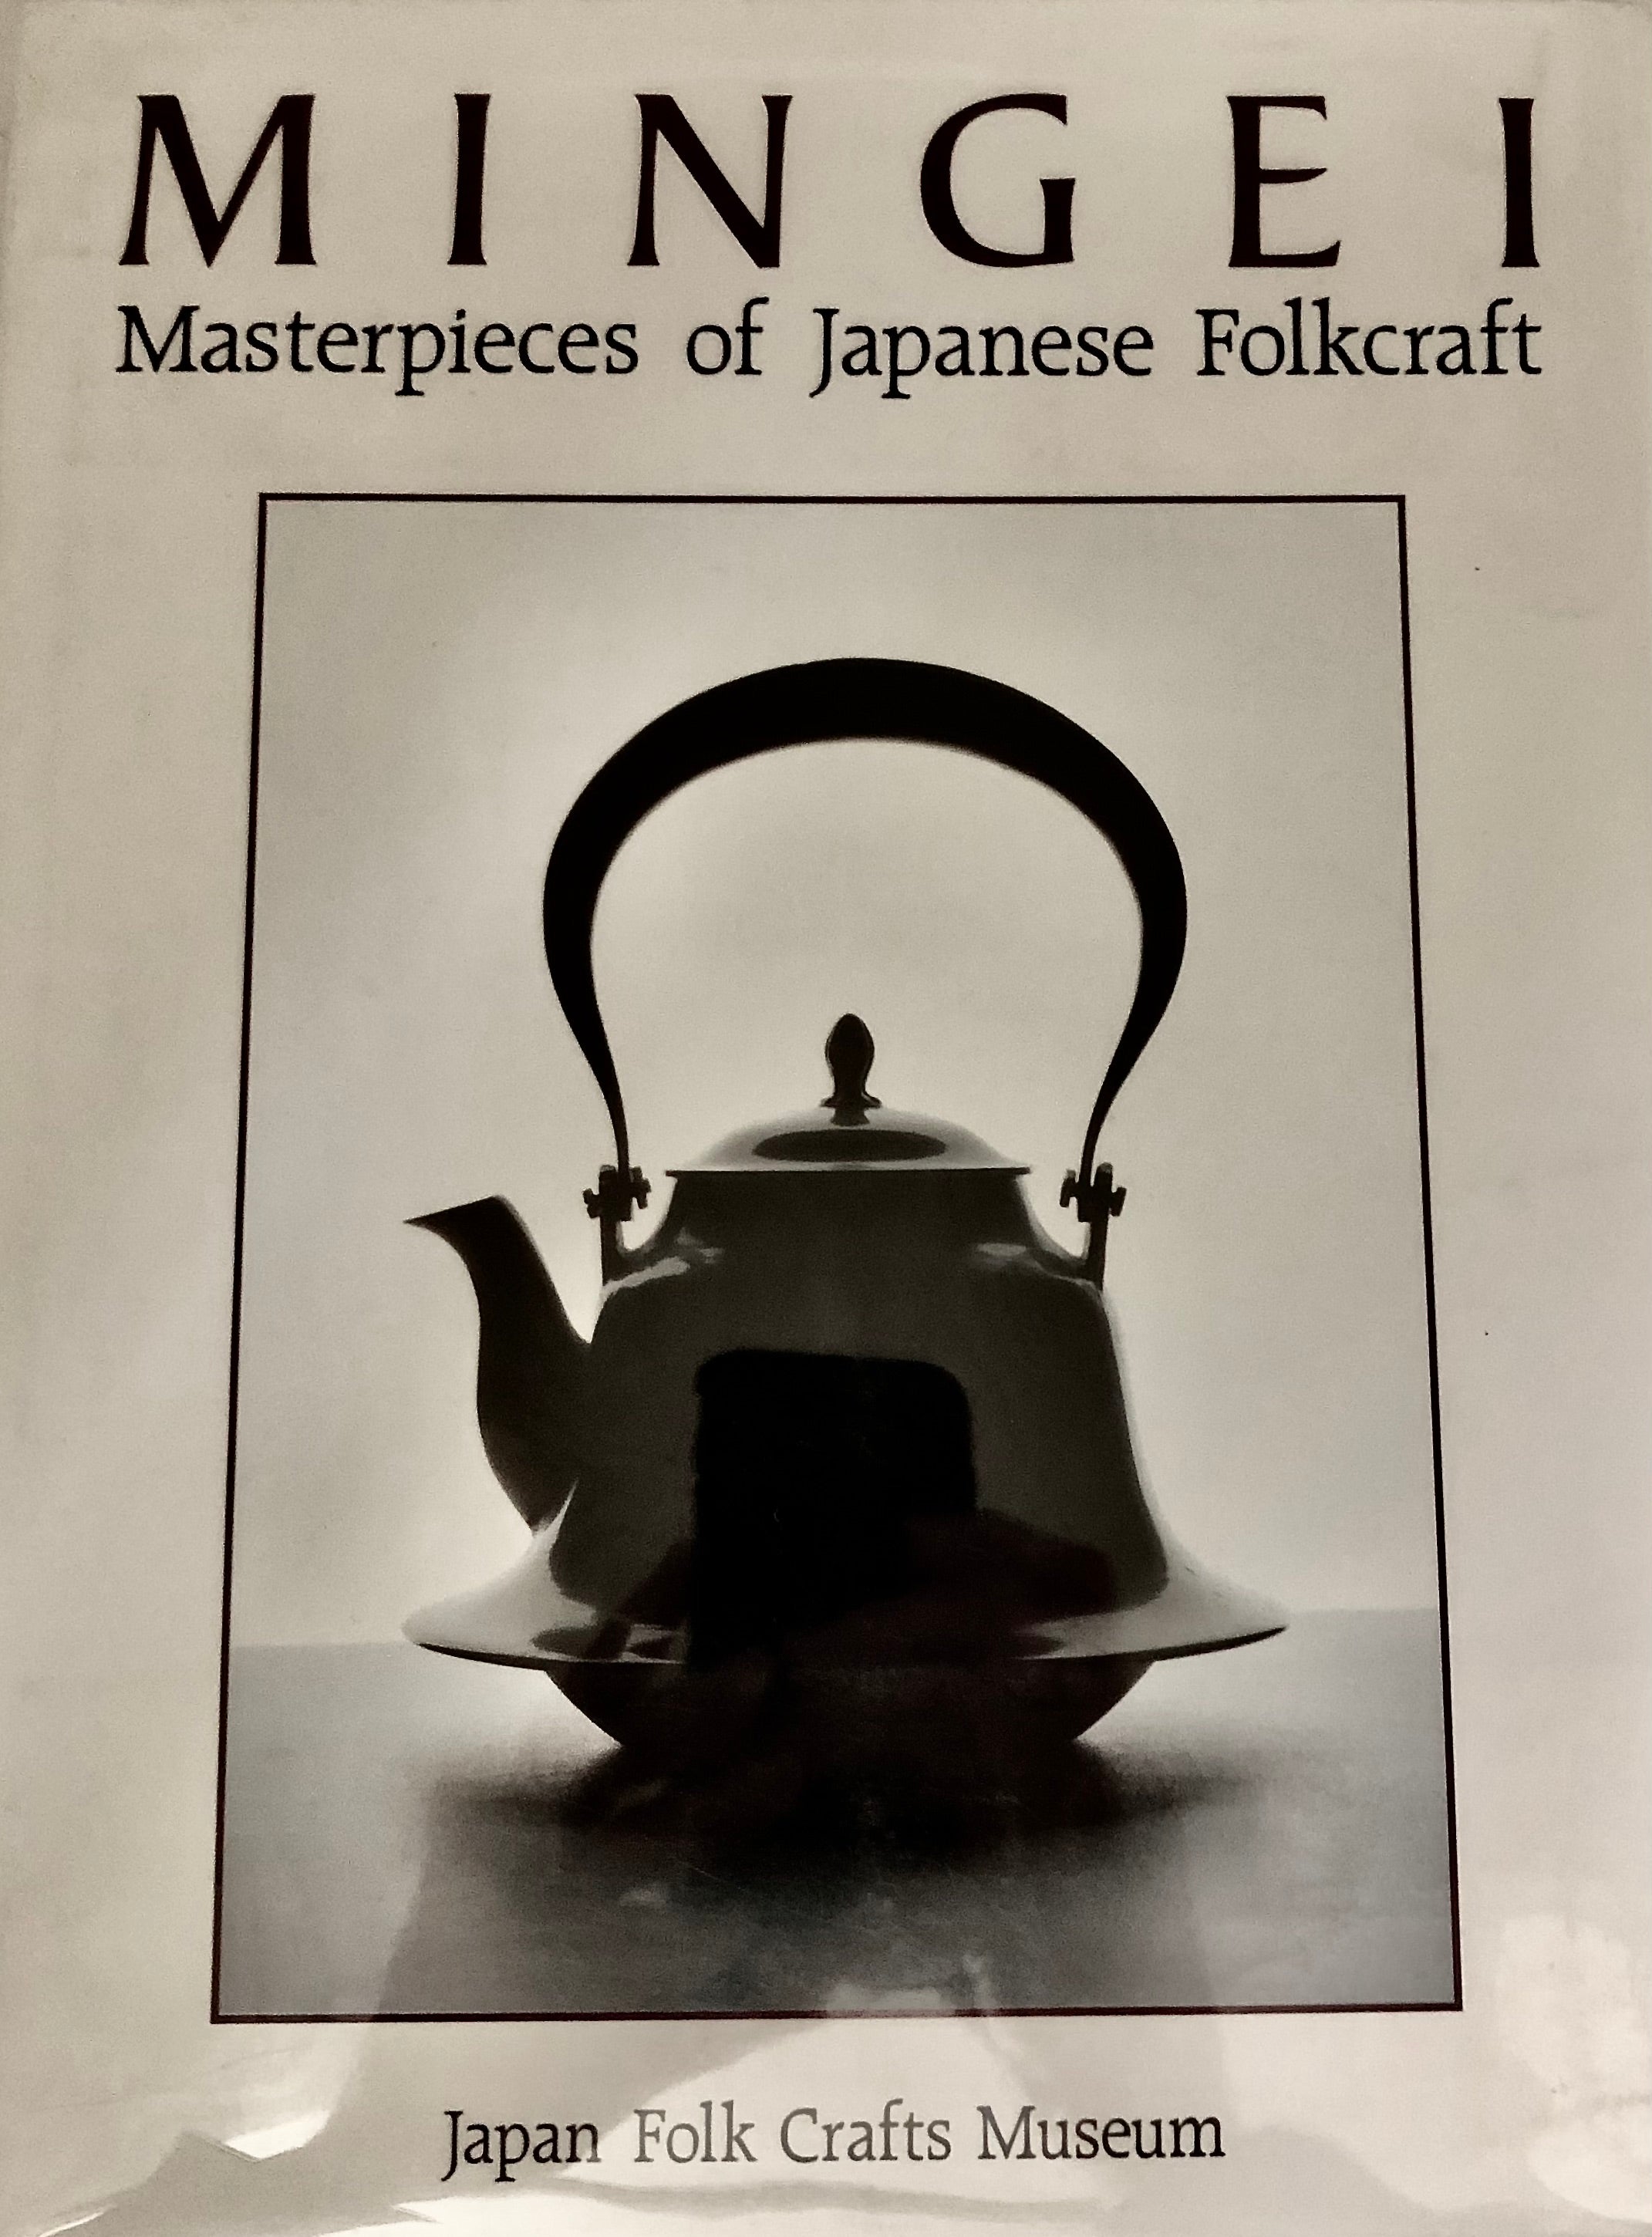 Mingei: Masterpieces of Japanese Folk Craft by Japan Folk Craft Museum